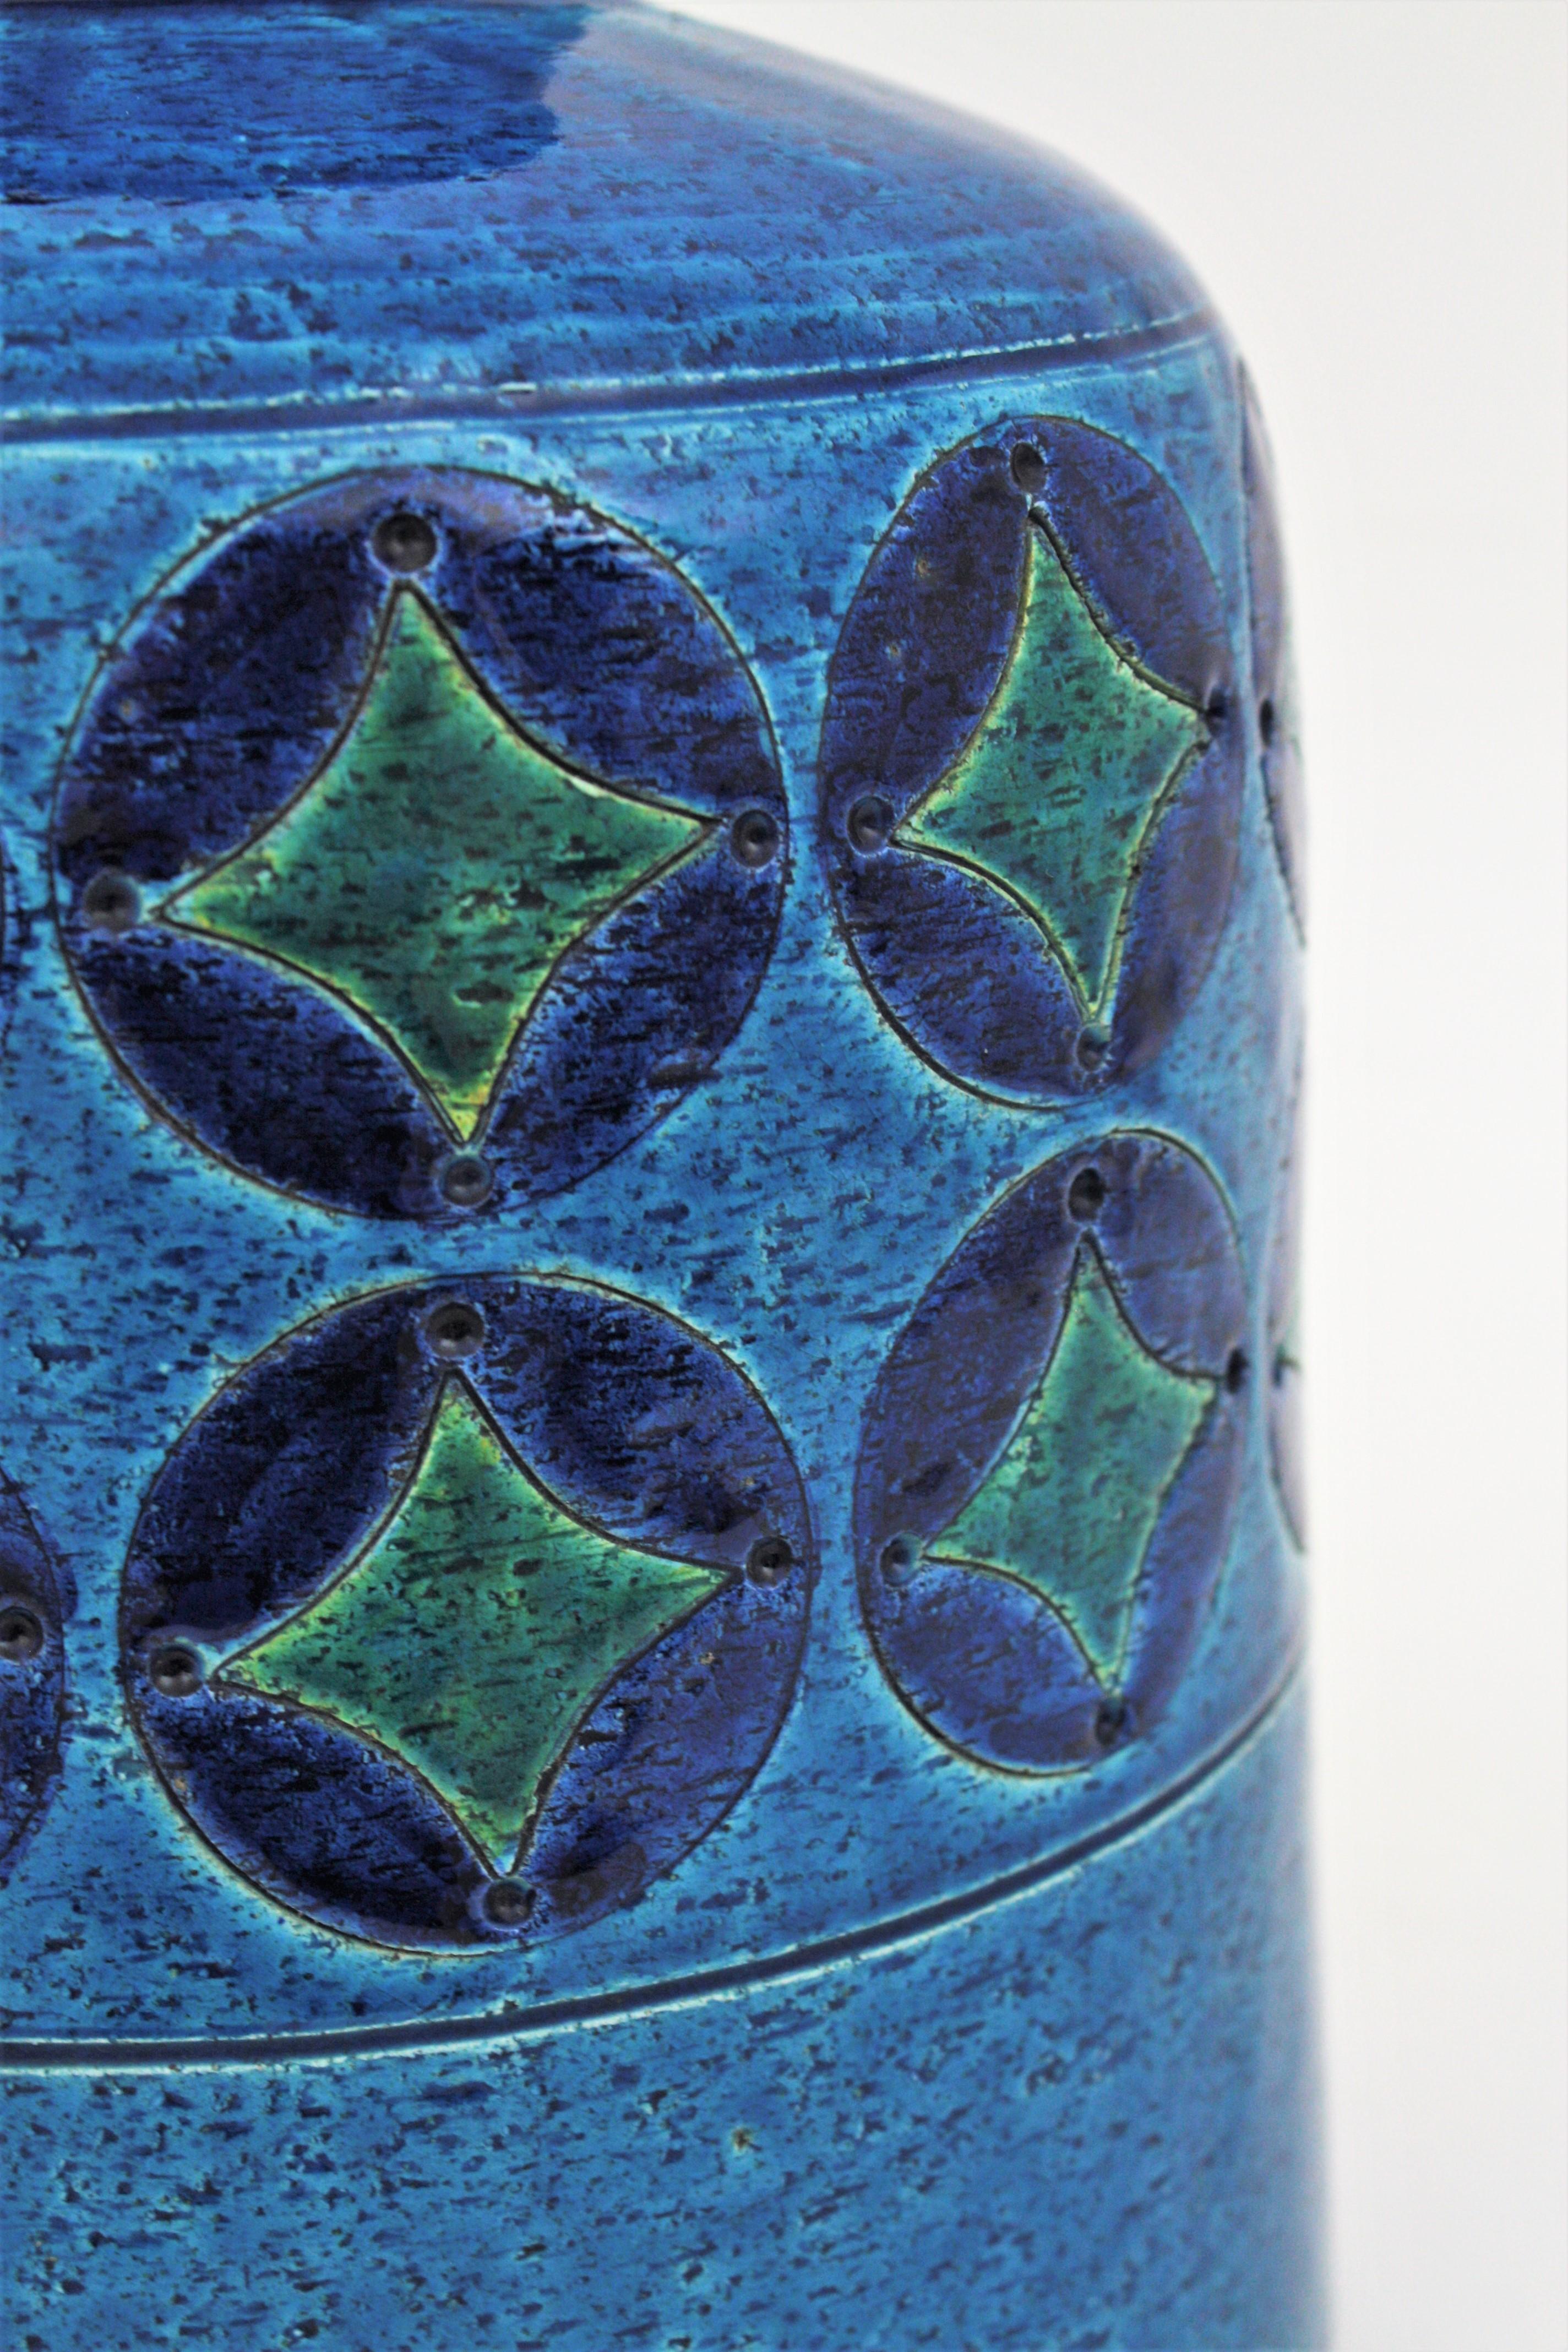 Bitossi Aldo Londi Blue Ceramic Large Bottle Vase with Circles & Rhombus Motif For Sale 1